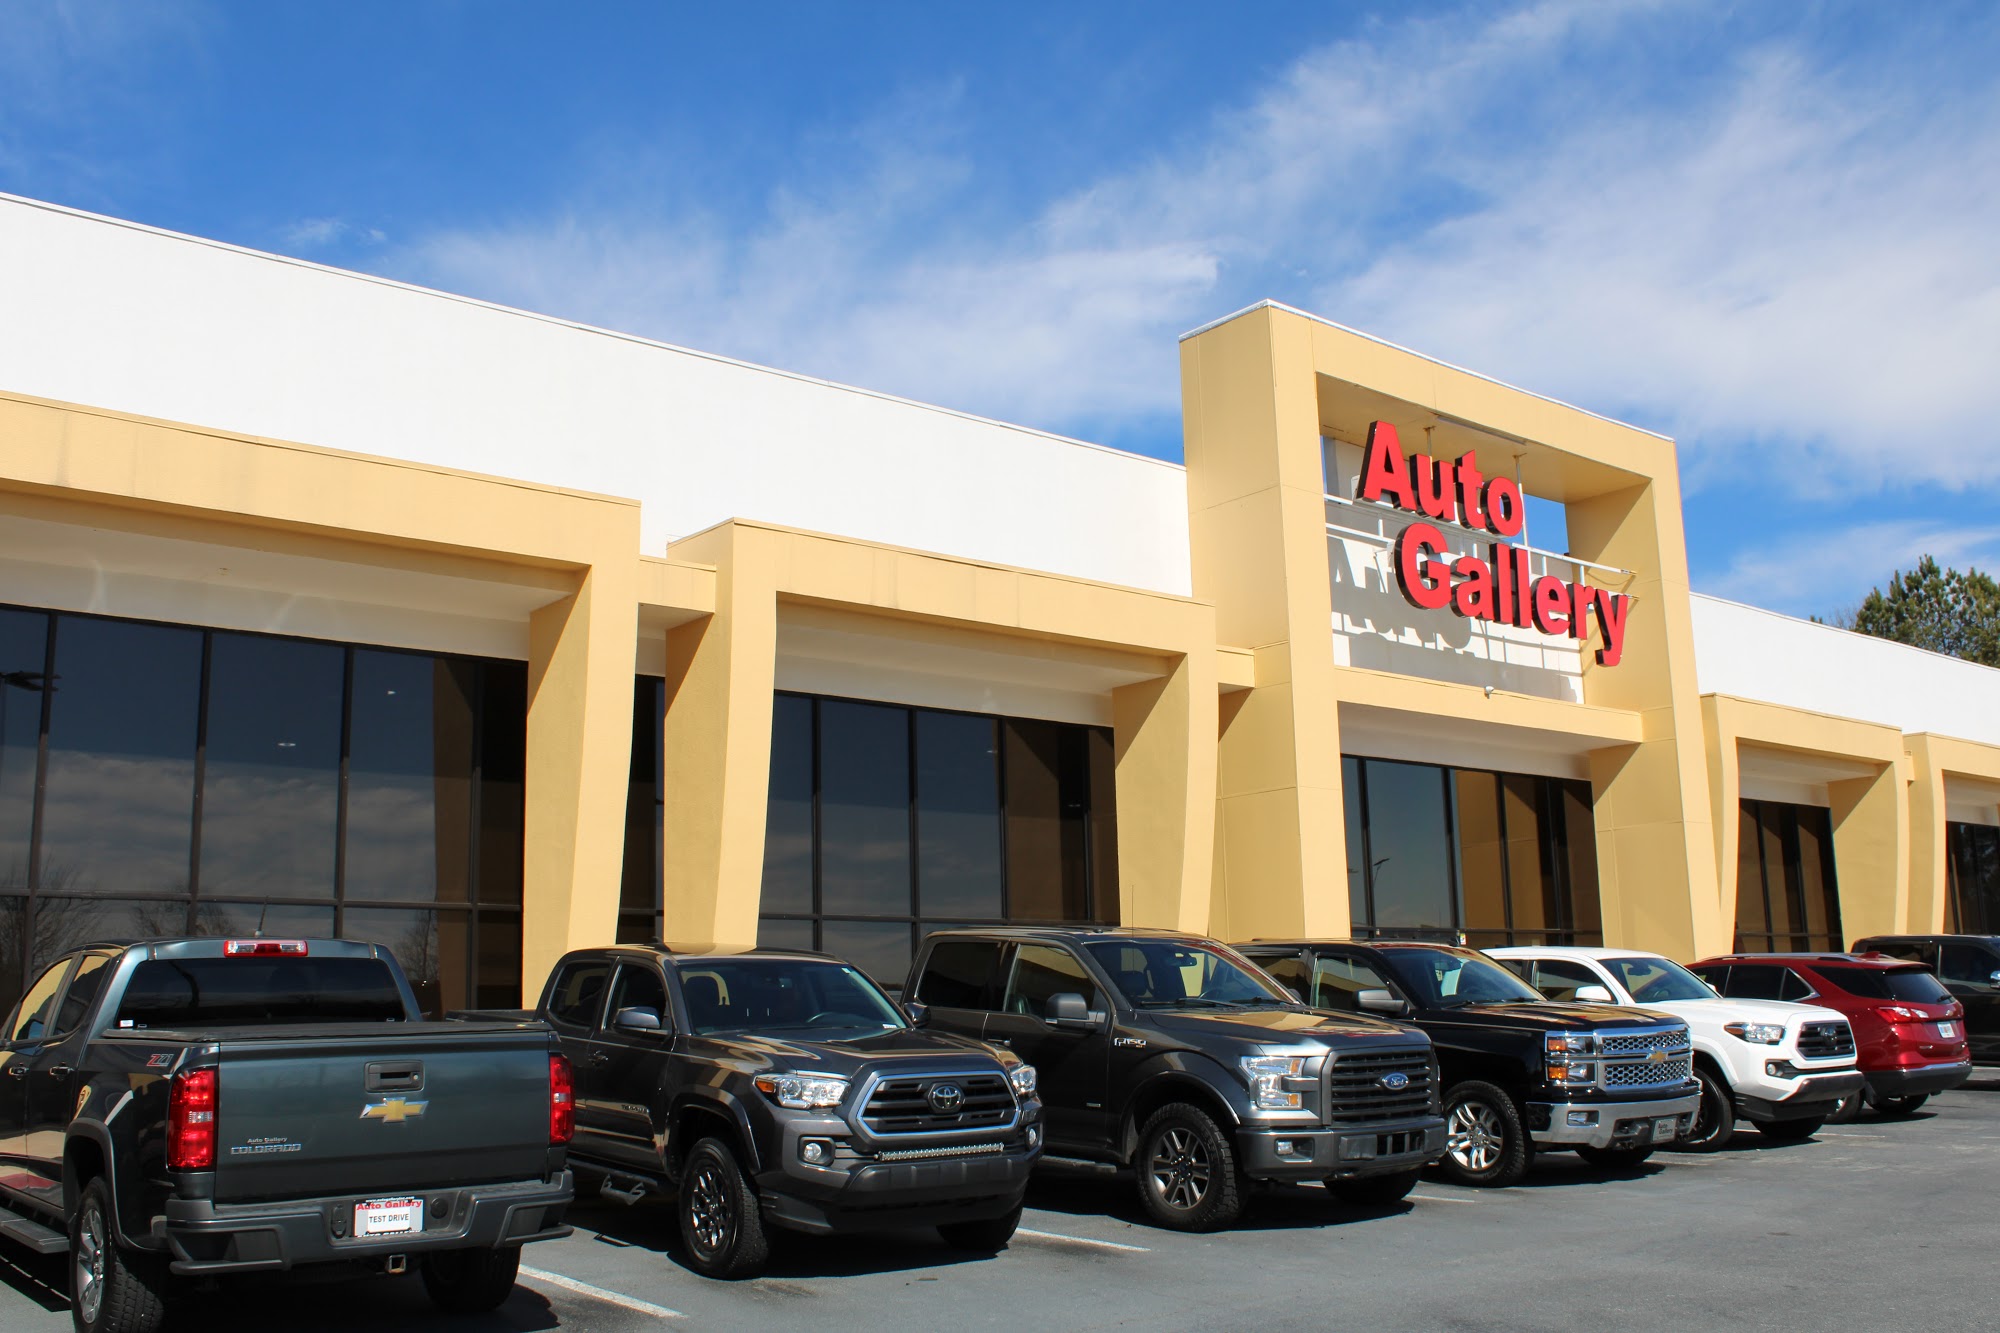 Auto Gallery Mall of Georgia